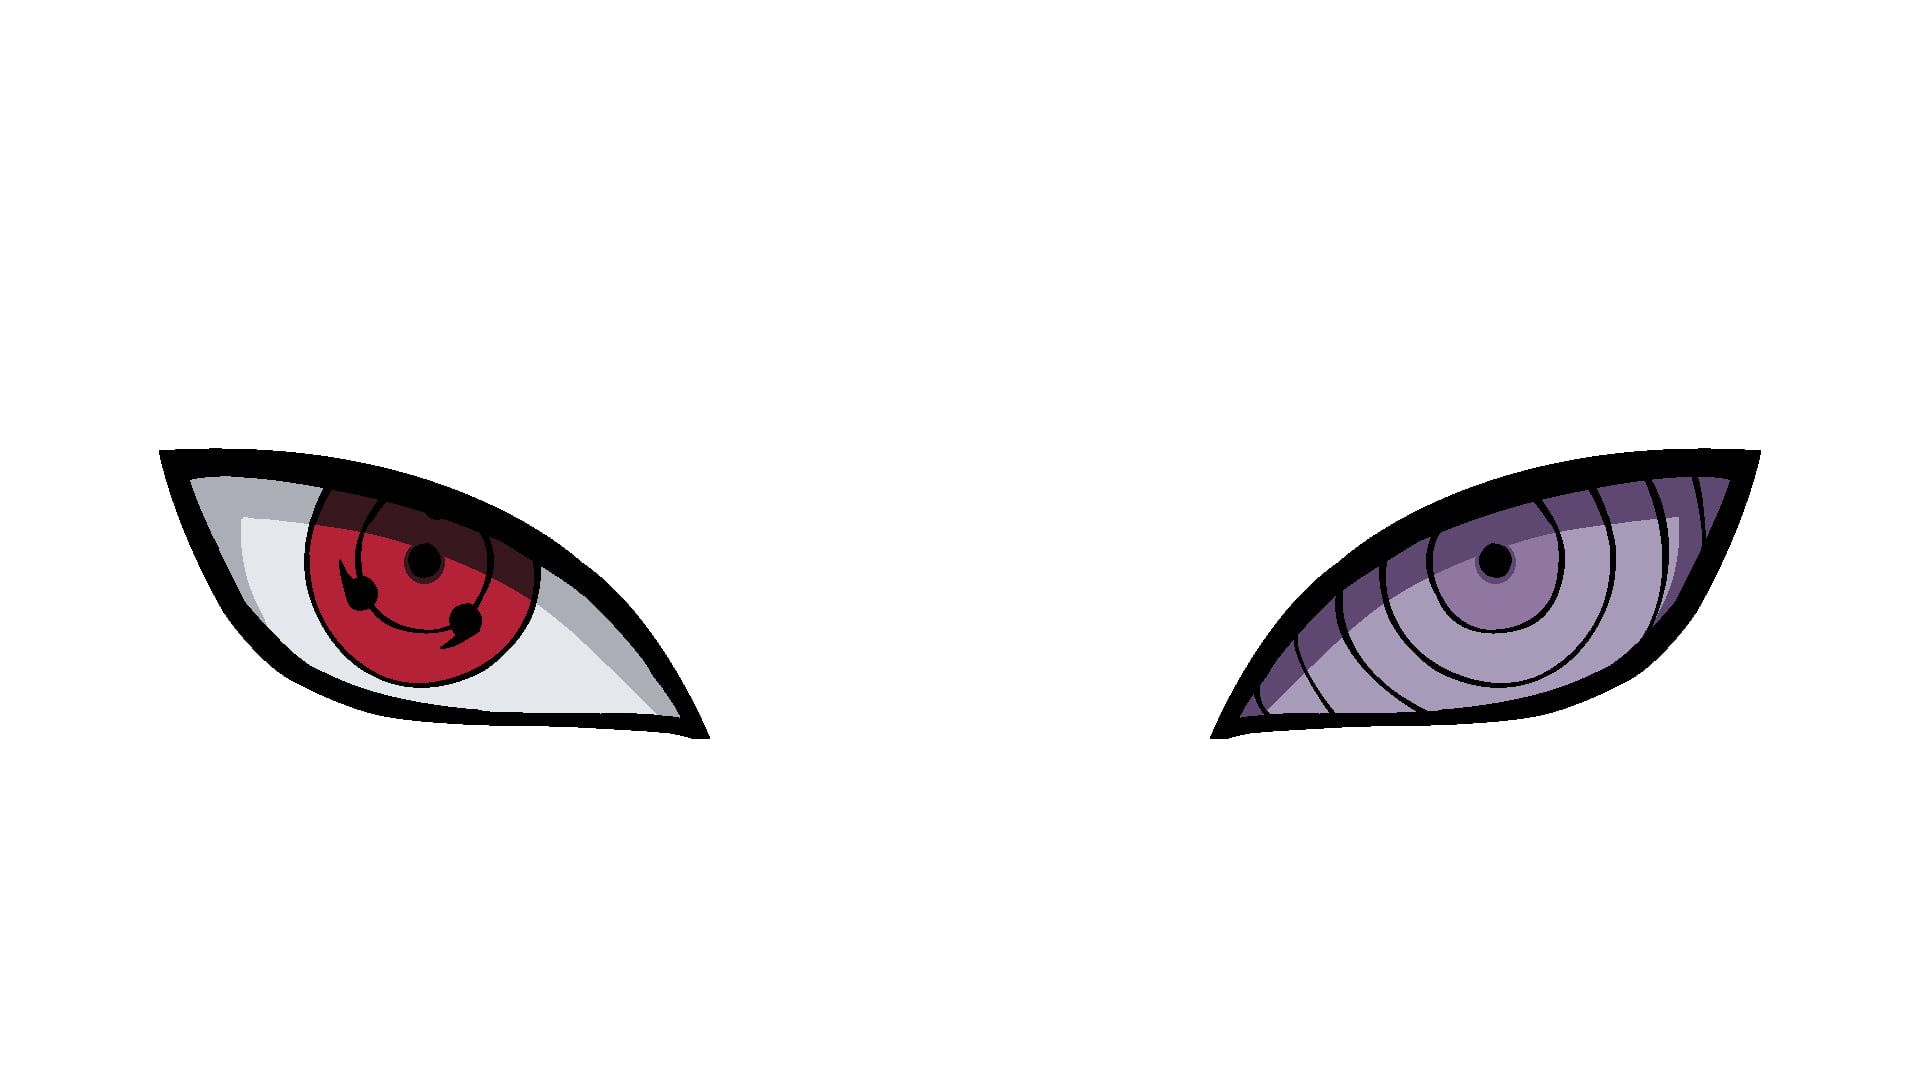 1920x1080 Naruto sharingan eye illustration #Sharingan #Rinnegan Naruto Shippuuden #eyes black background #1080P #wallpaper #hdw&acirc;&#128;&brvbar; | Naruto eyes, Eyes wallpaper, Naruto tatt